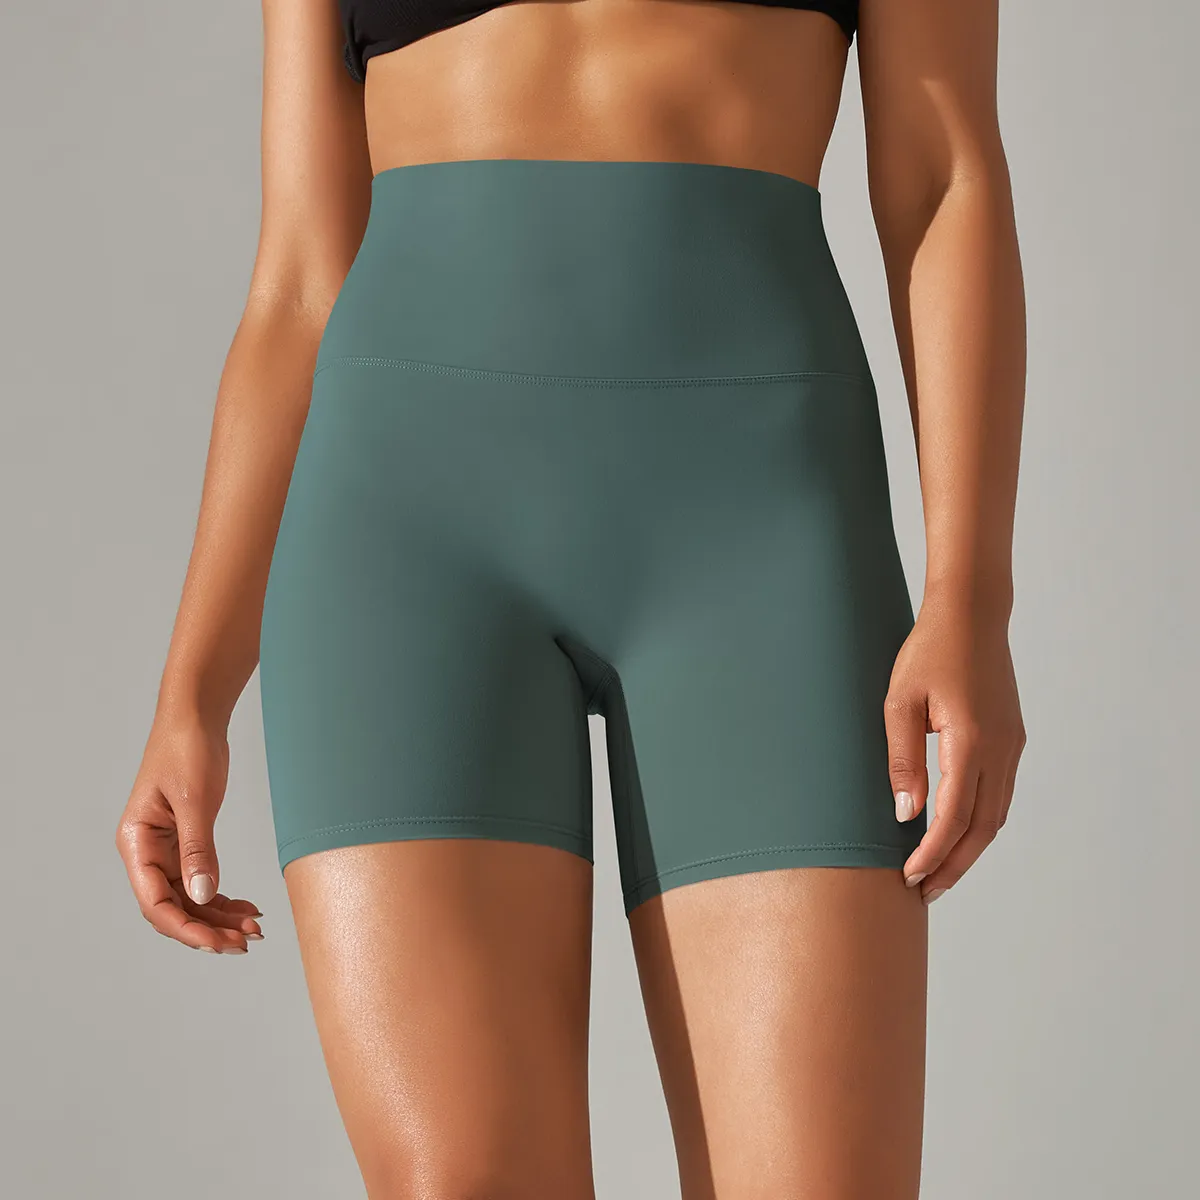 Yoga Shorts Women Fitness Shorts Running Cycling Shorts Breathable Sports Leggings High Waist Summer Workout Gym Shorts